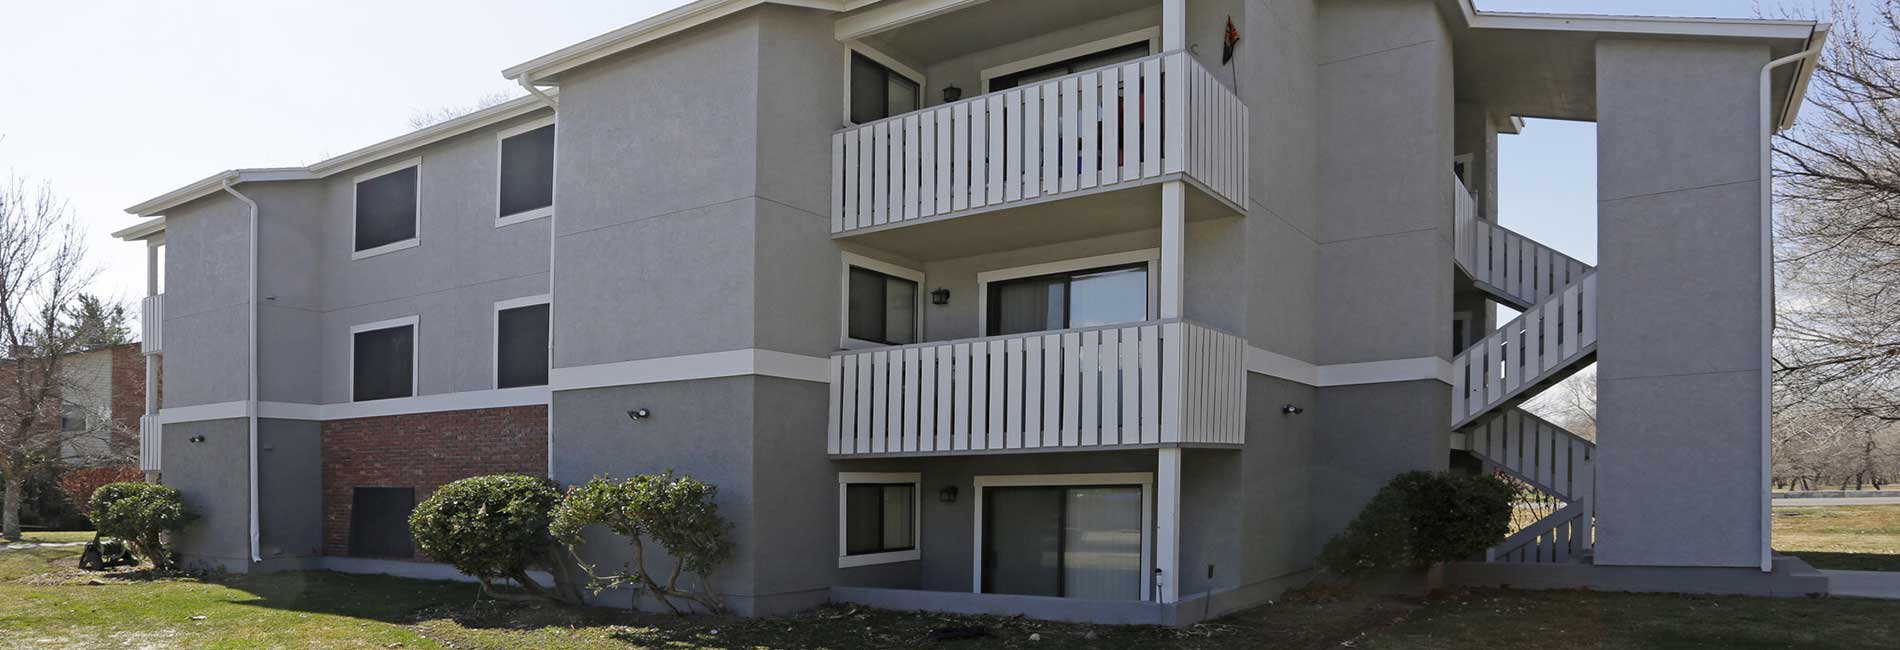 1 and 2-bedroom Apartments for Rent in Salk Lake City, Utah